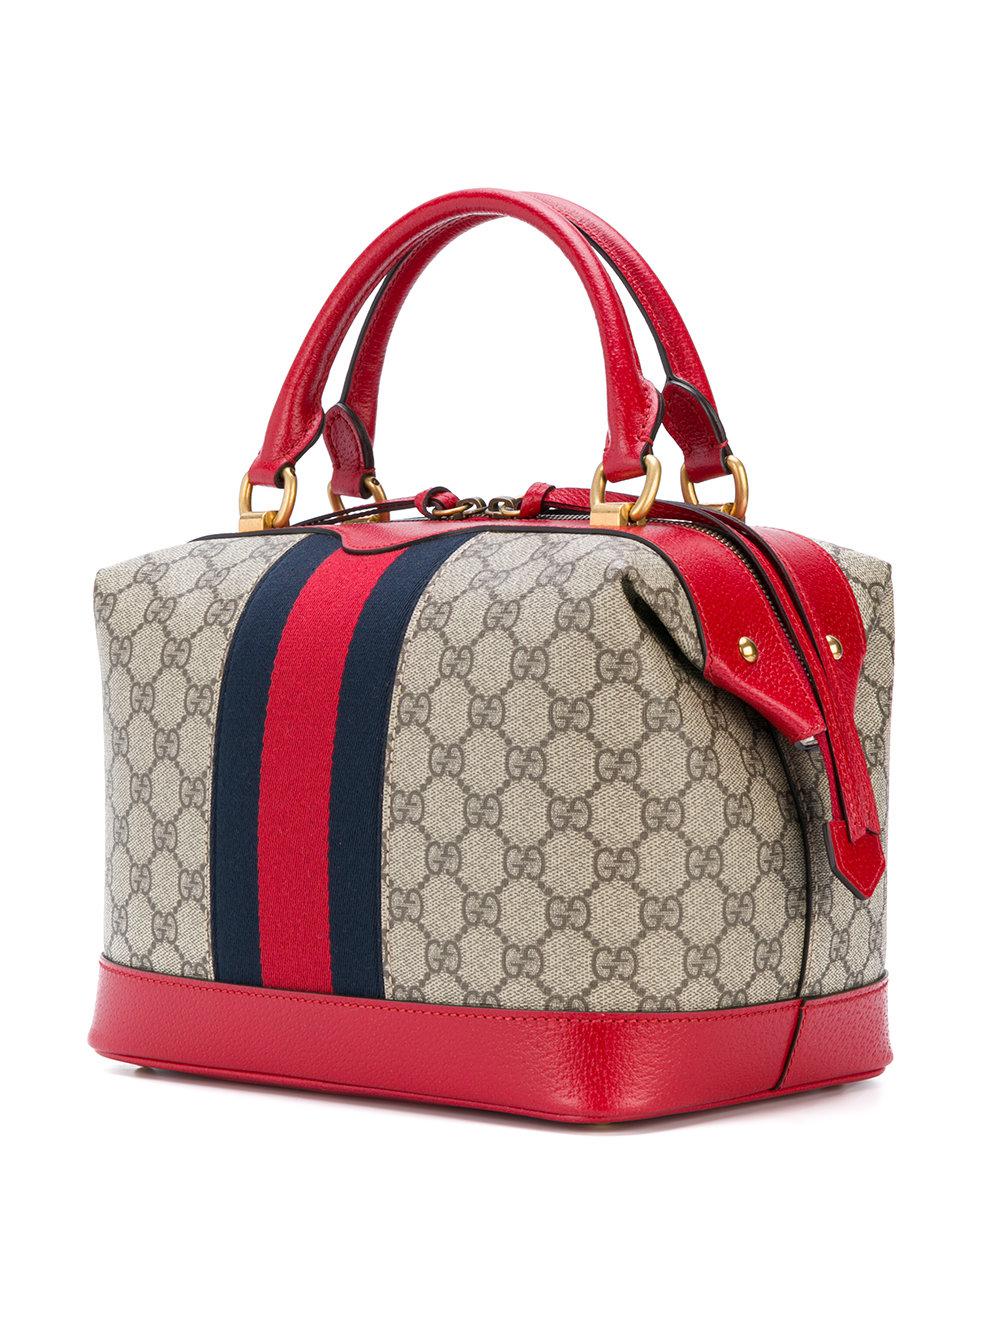 Gucci Supreme Handbags :: Keweenaw Bay Indian Community